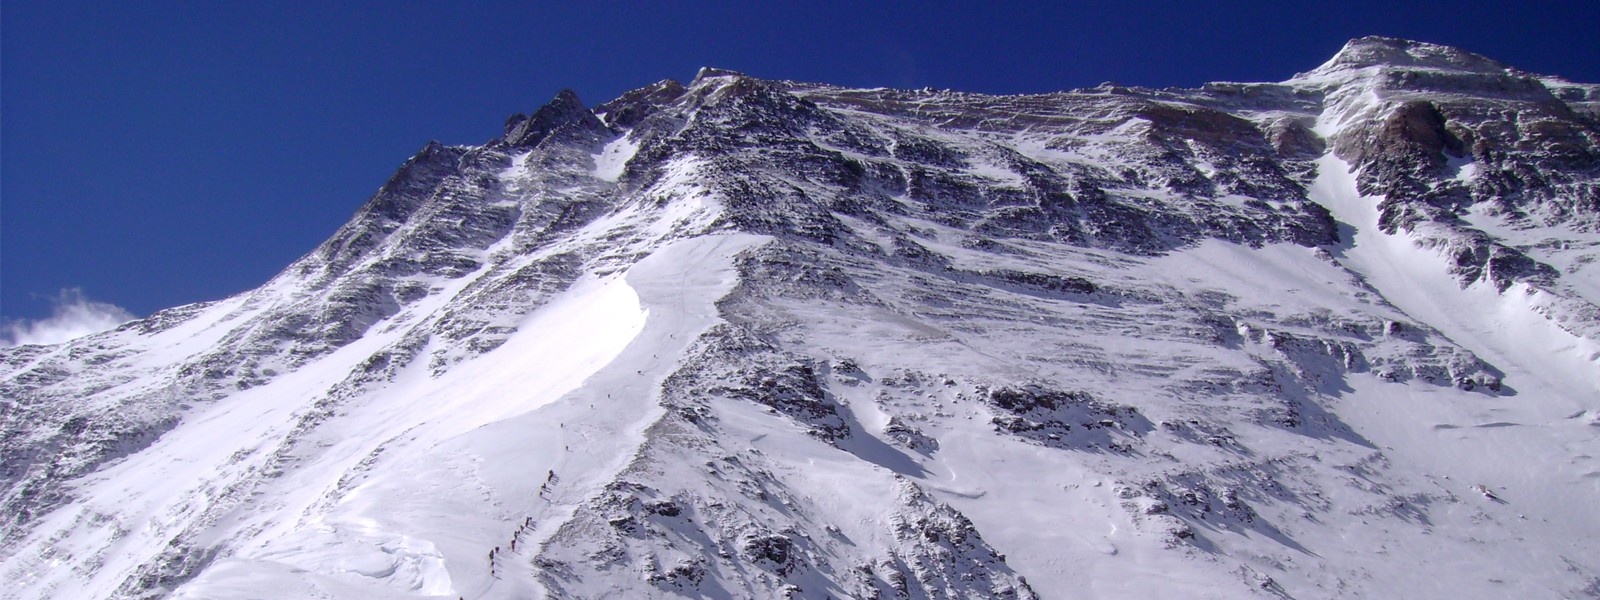 International Everest North Col Expedition via Lhasa